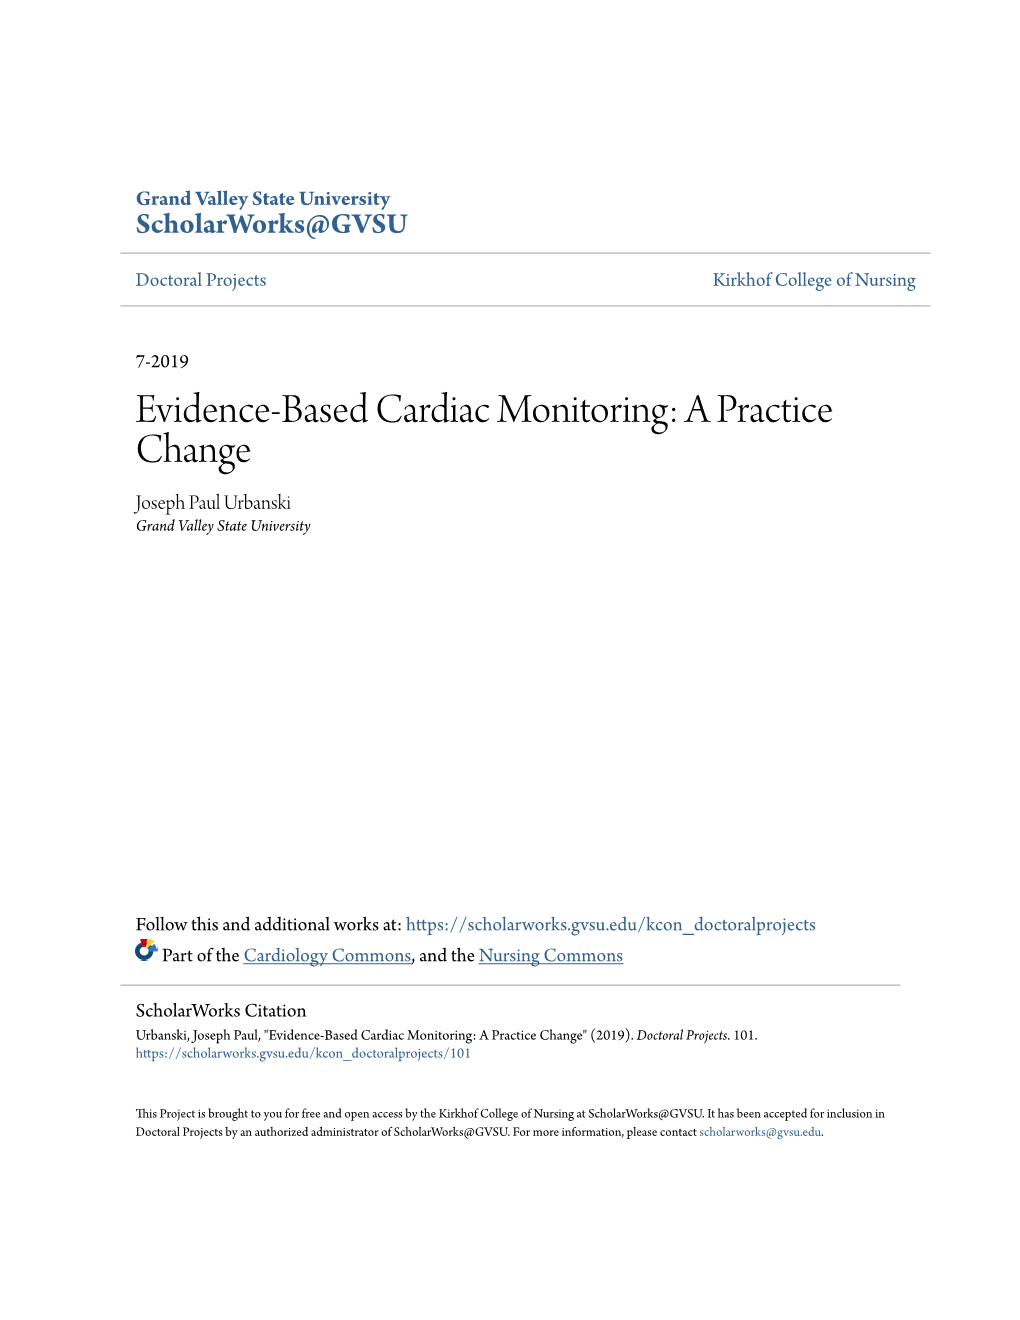 Evidence-Based Cardiac Monitoring: a Practice Change Joseph Paul Urbanski Grand Valley State University